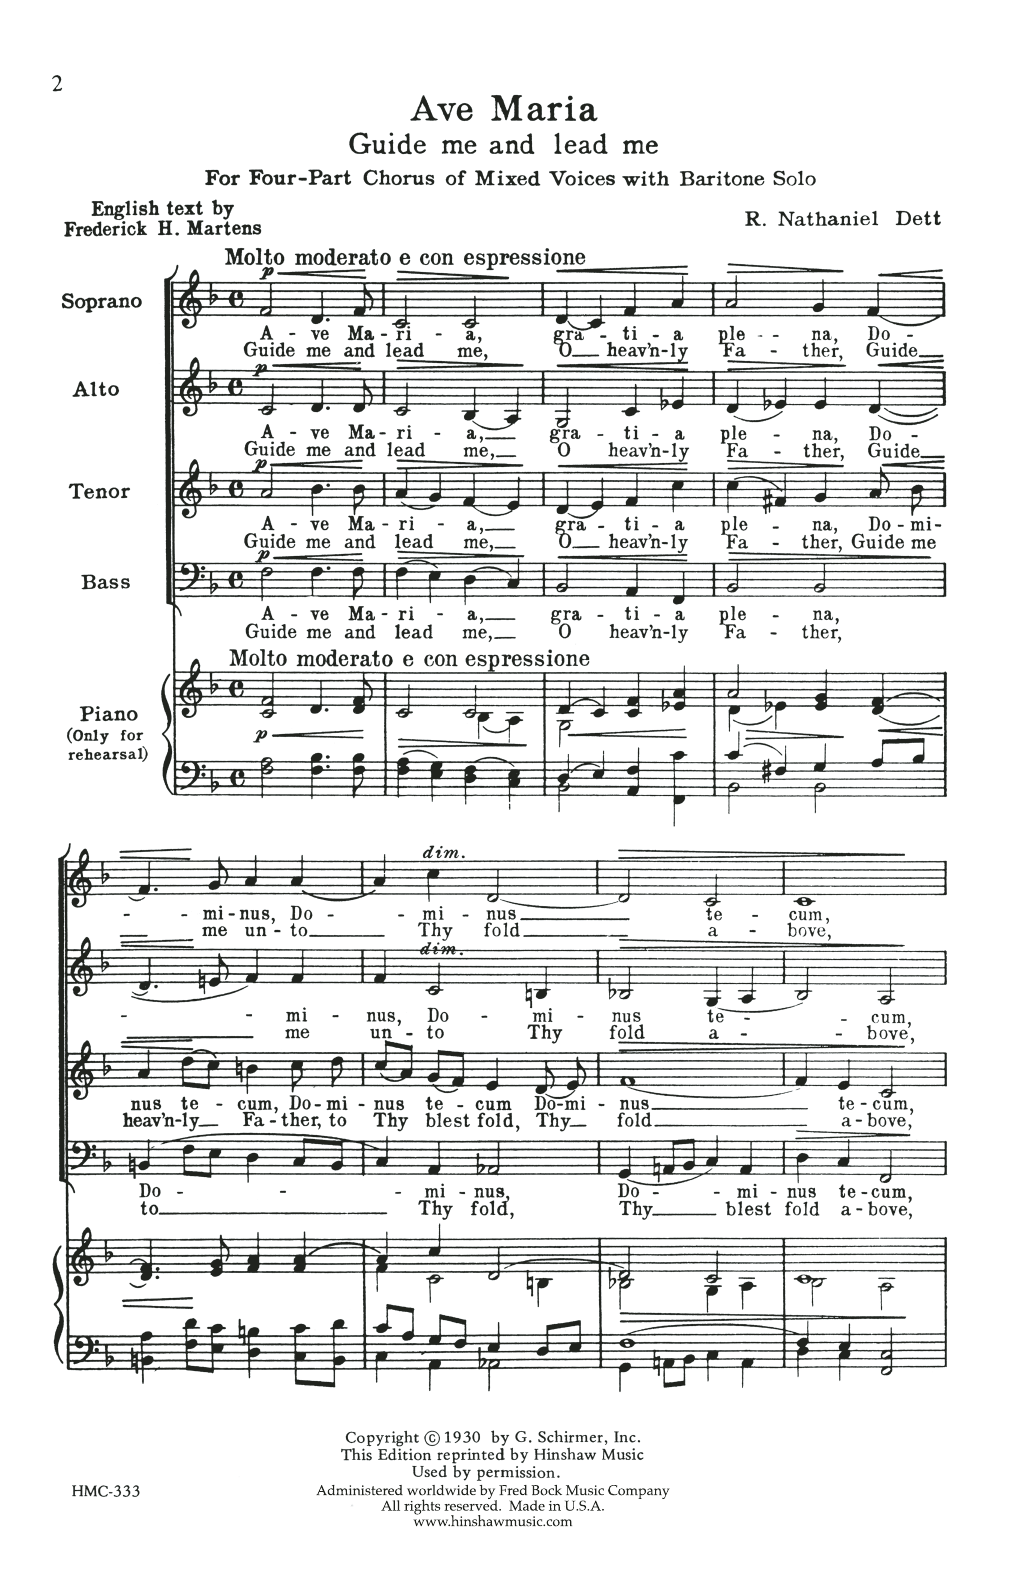 Nathaniel Dett Ave Maria Sheet Music Notes & Chords for SATB Choir - Download or Print PDF